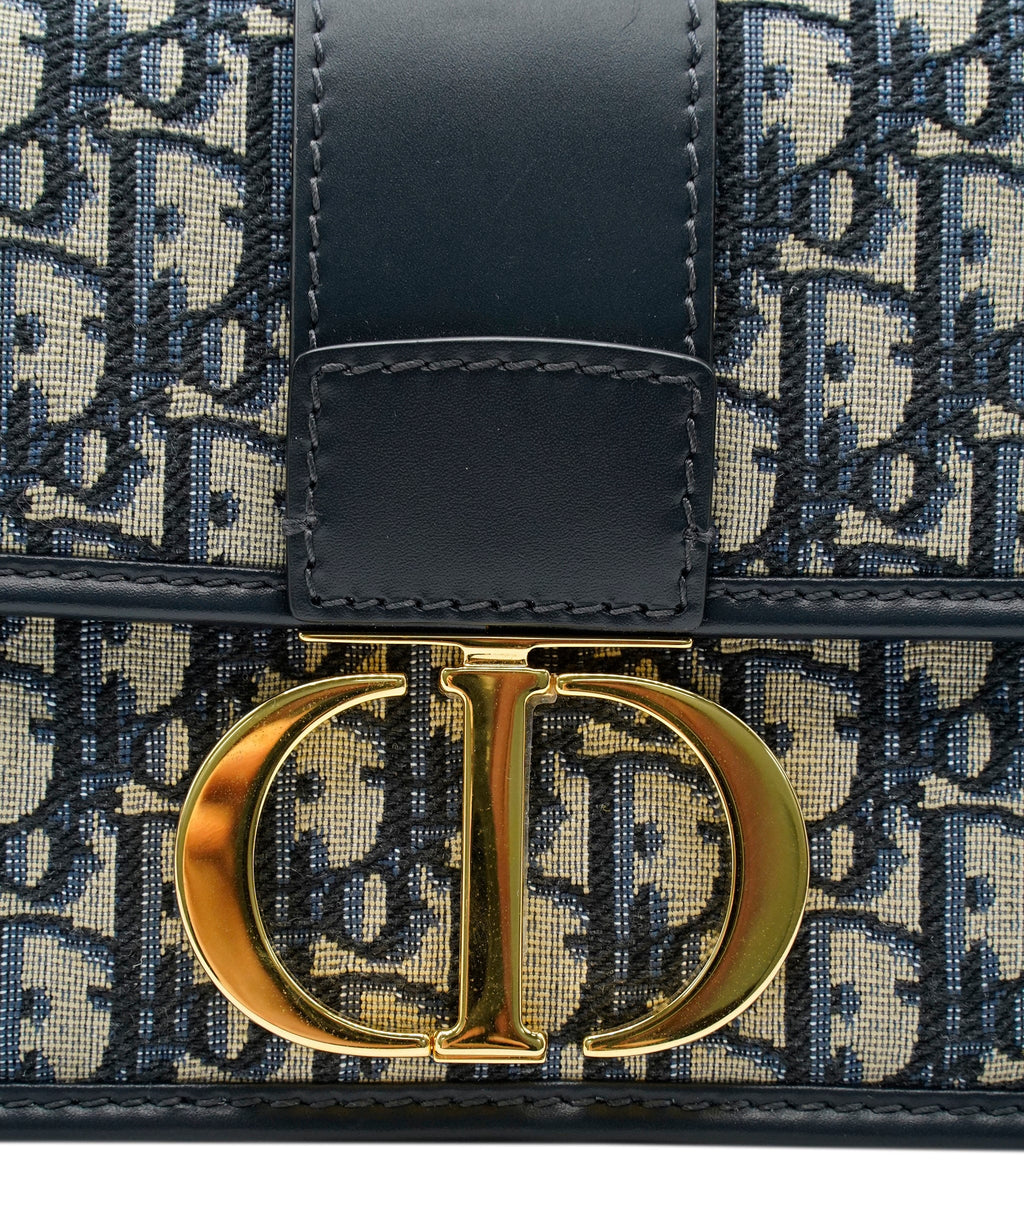 Original Dior 30 MONTAIGNE EAST-WEST BAG for Sale in Miami